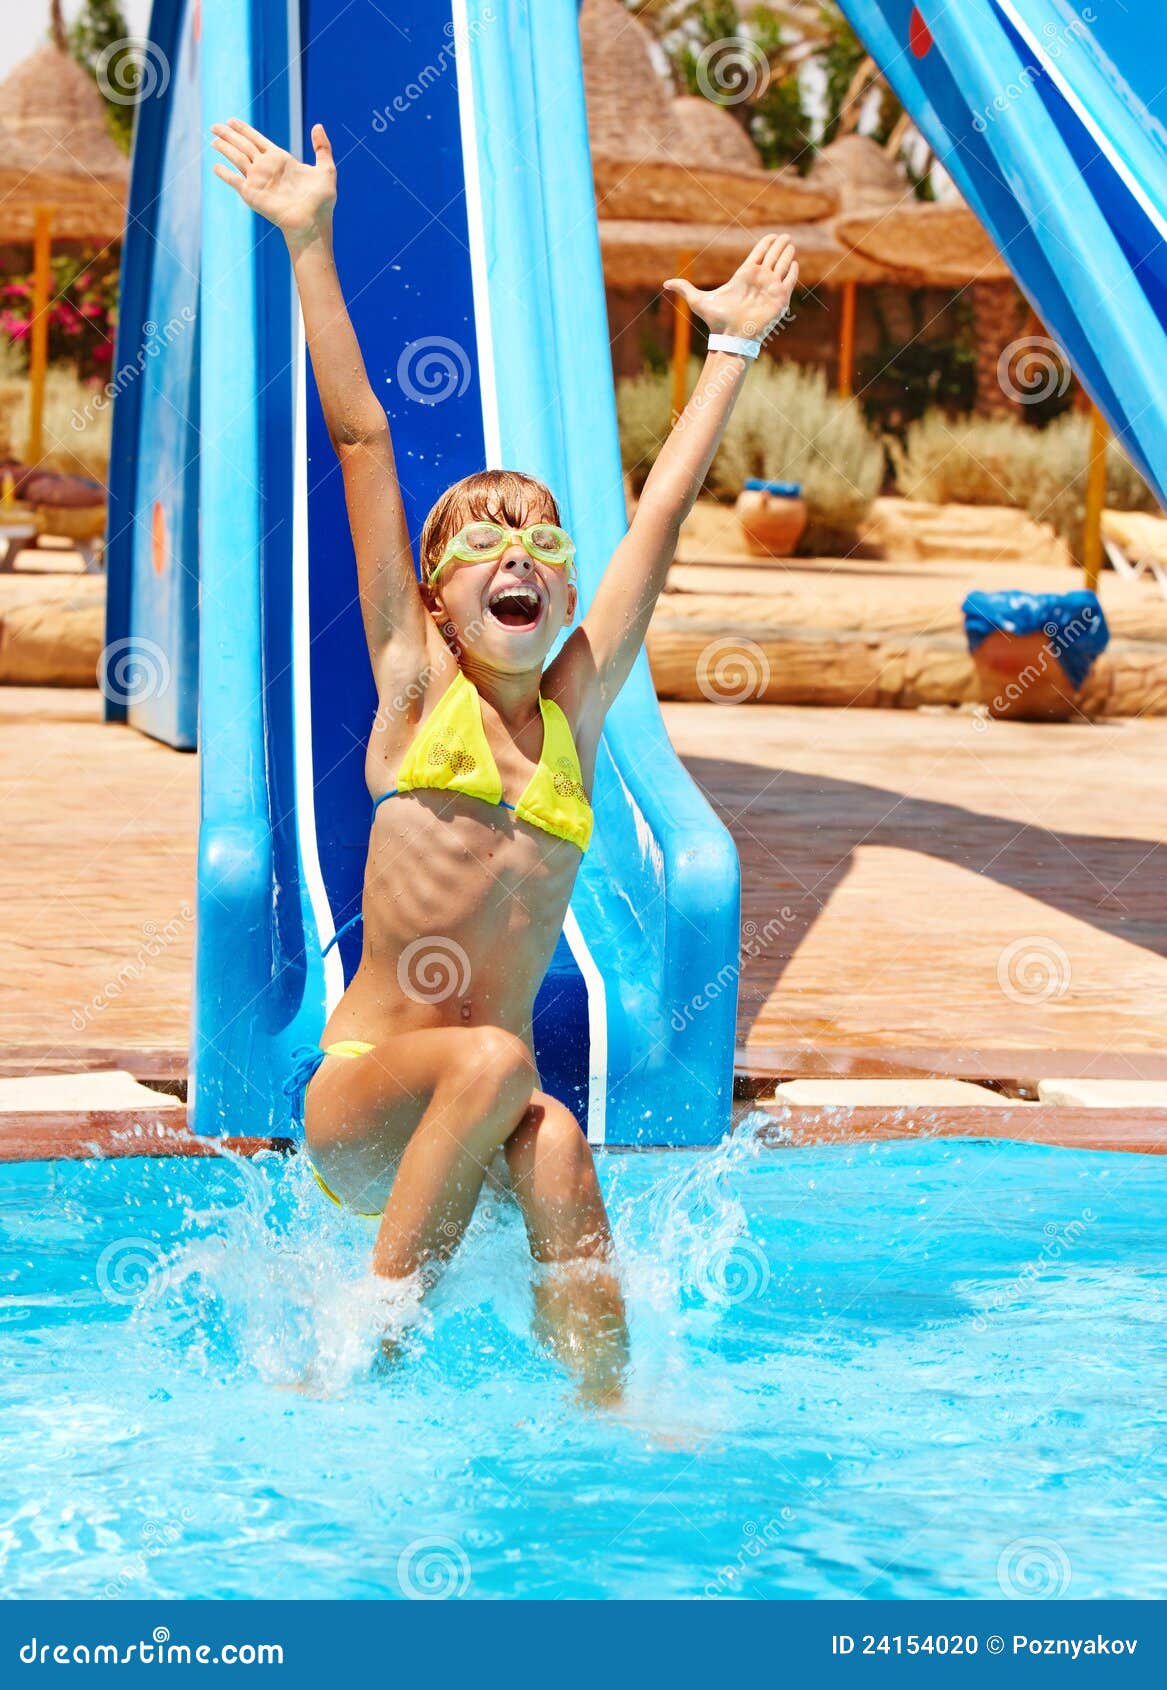 diana lundin recommends water park bikini slip pic